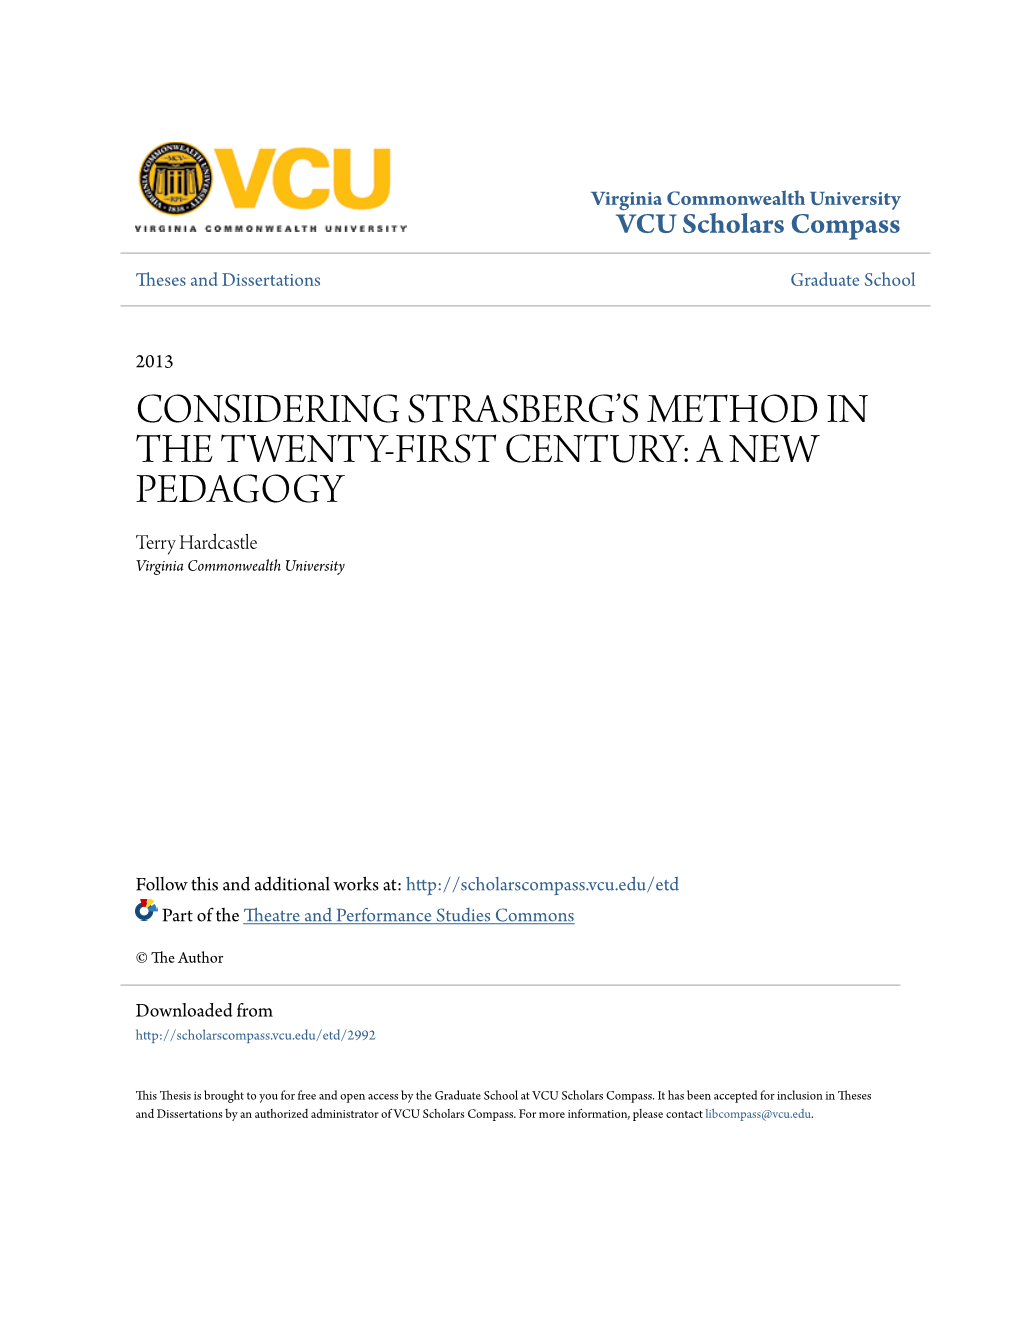 Considering Strasbergâ•Žs Method in the Twenty-First Century: a New Pedagogy